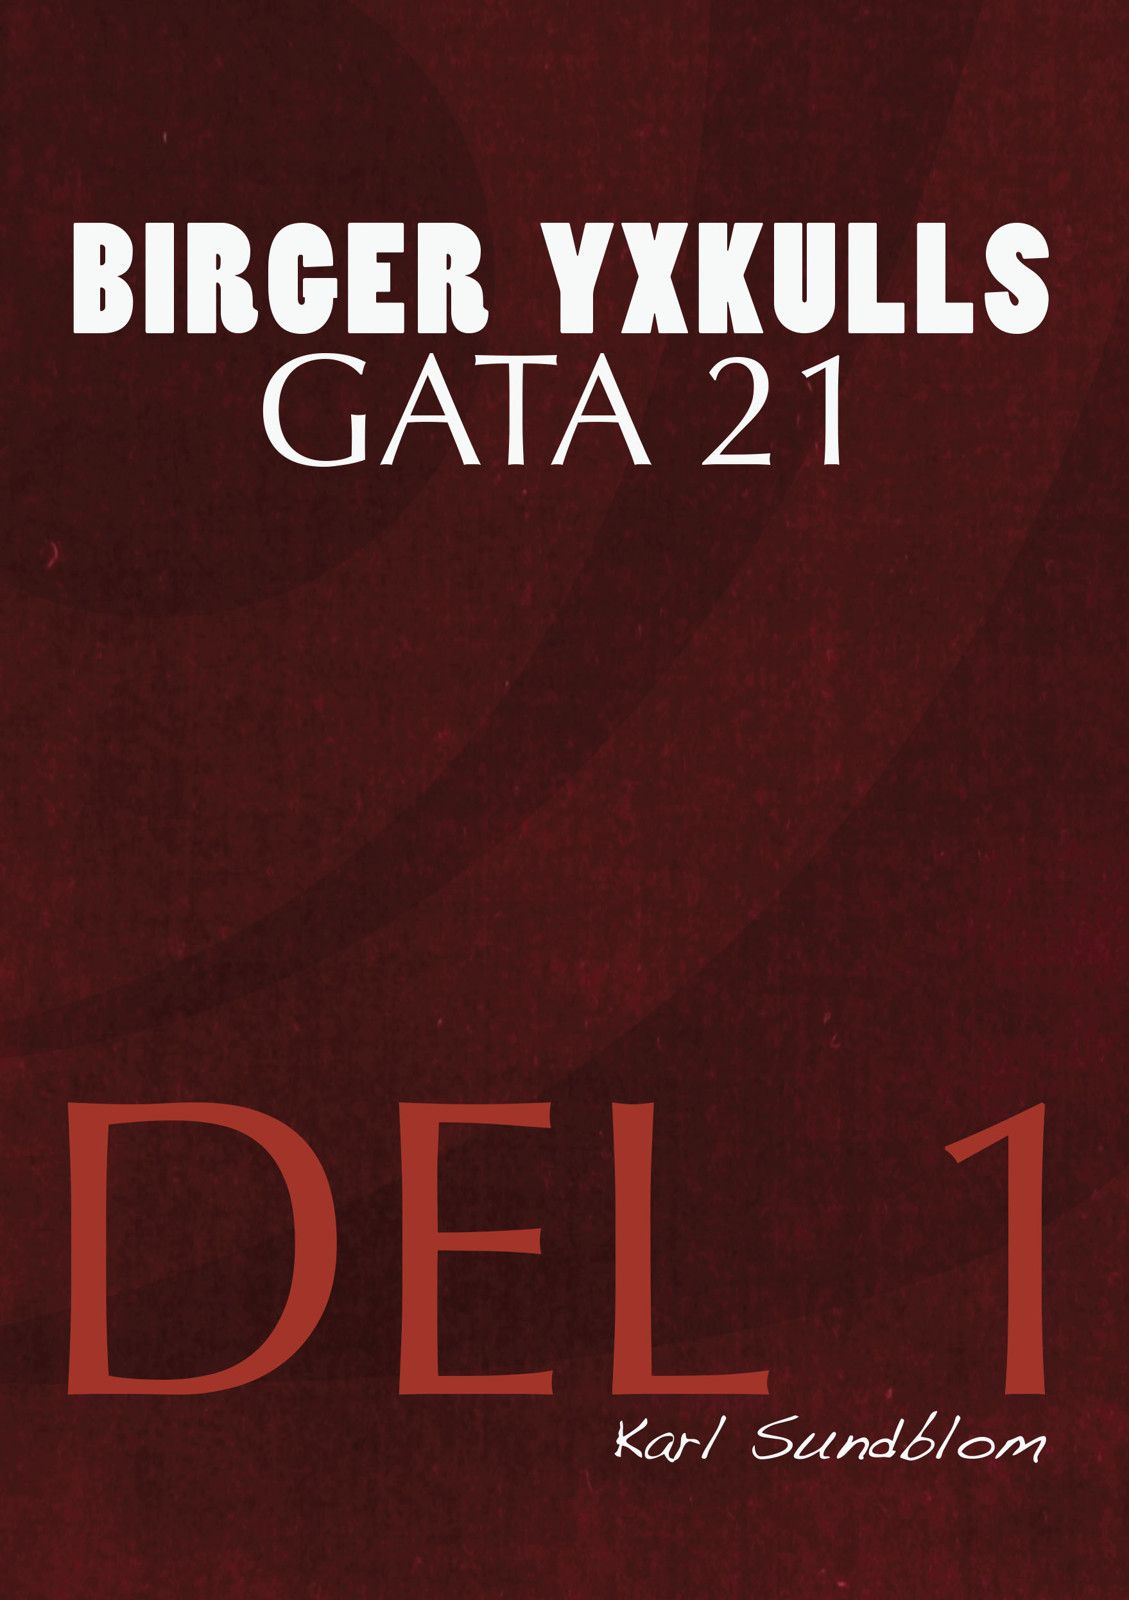 BIRGER YXKULLS GATA 21, DEL 1, eBook by Karl Sundblom